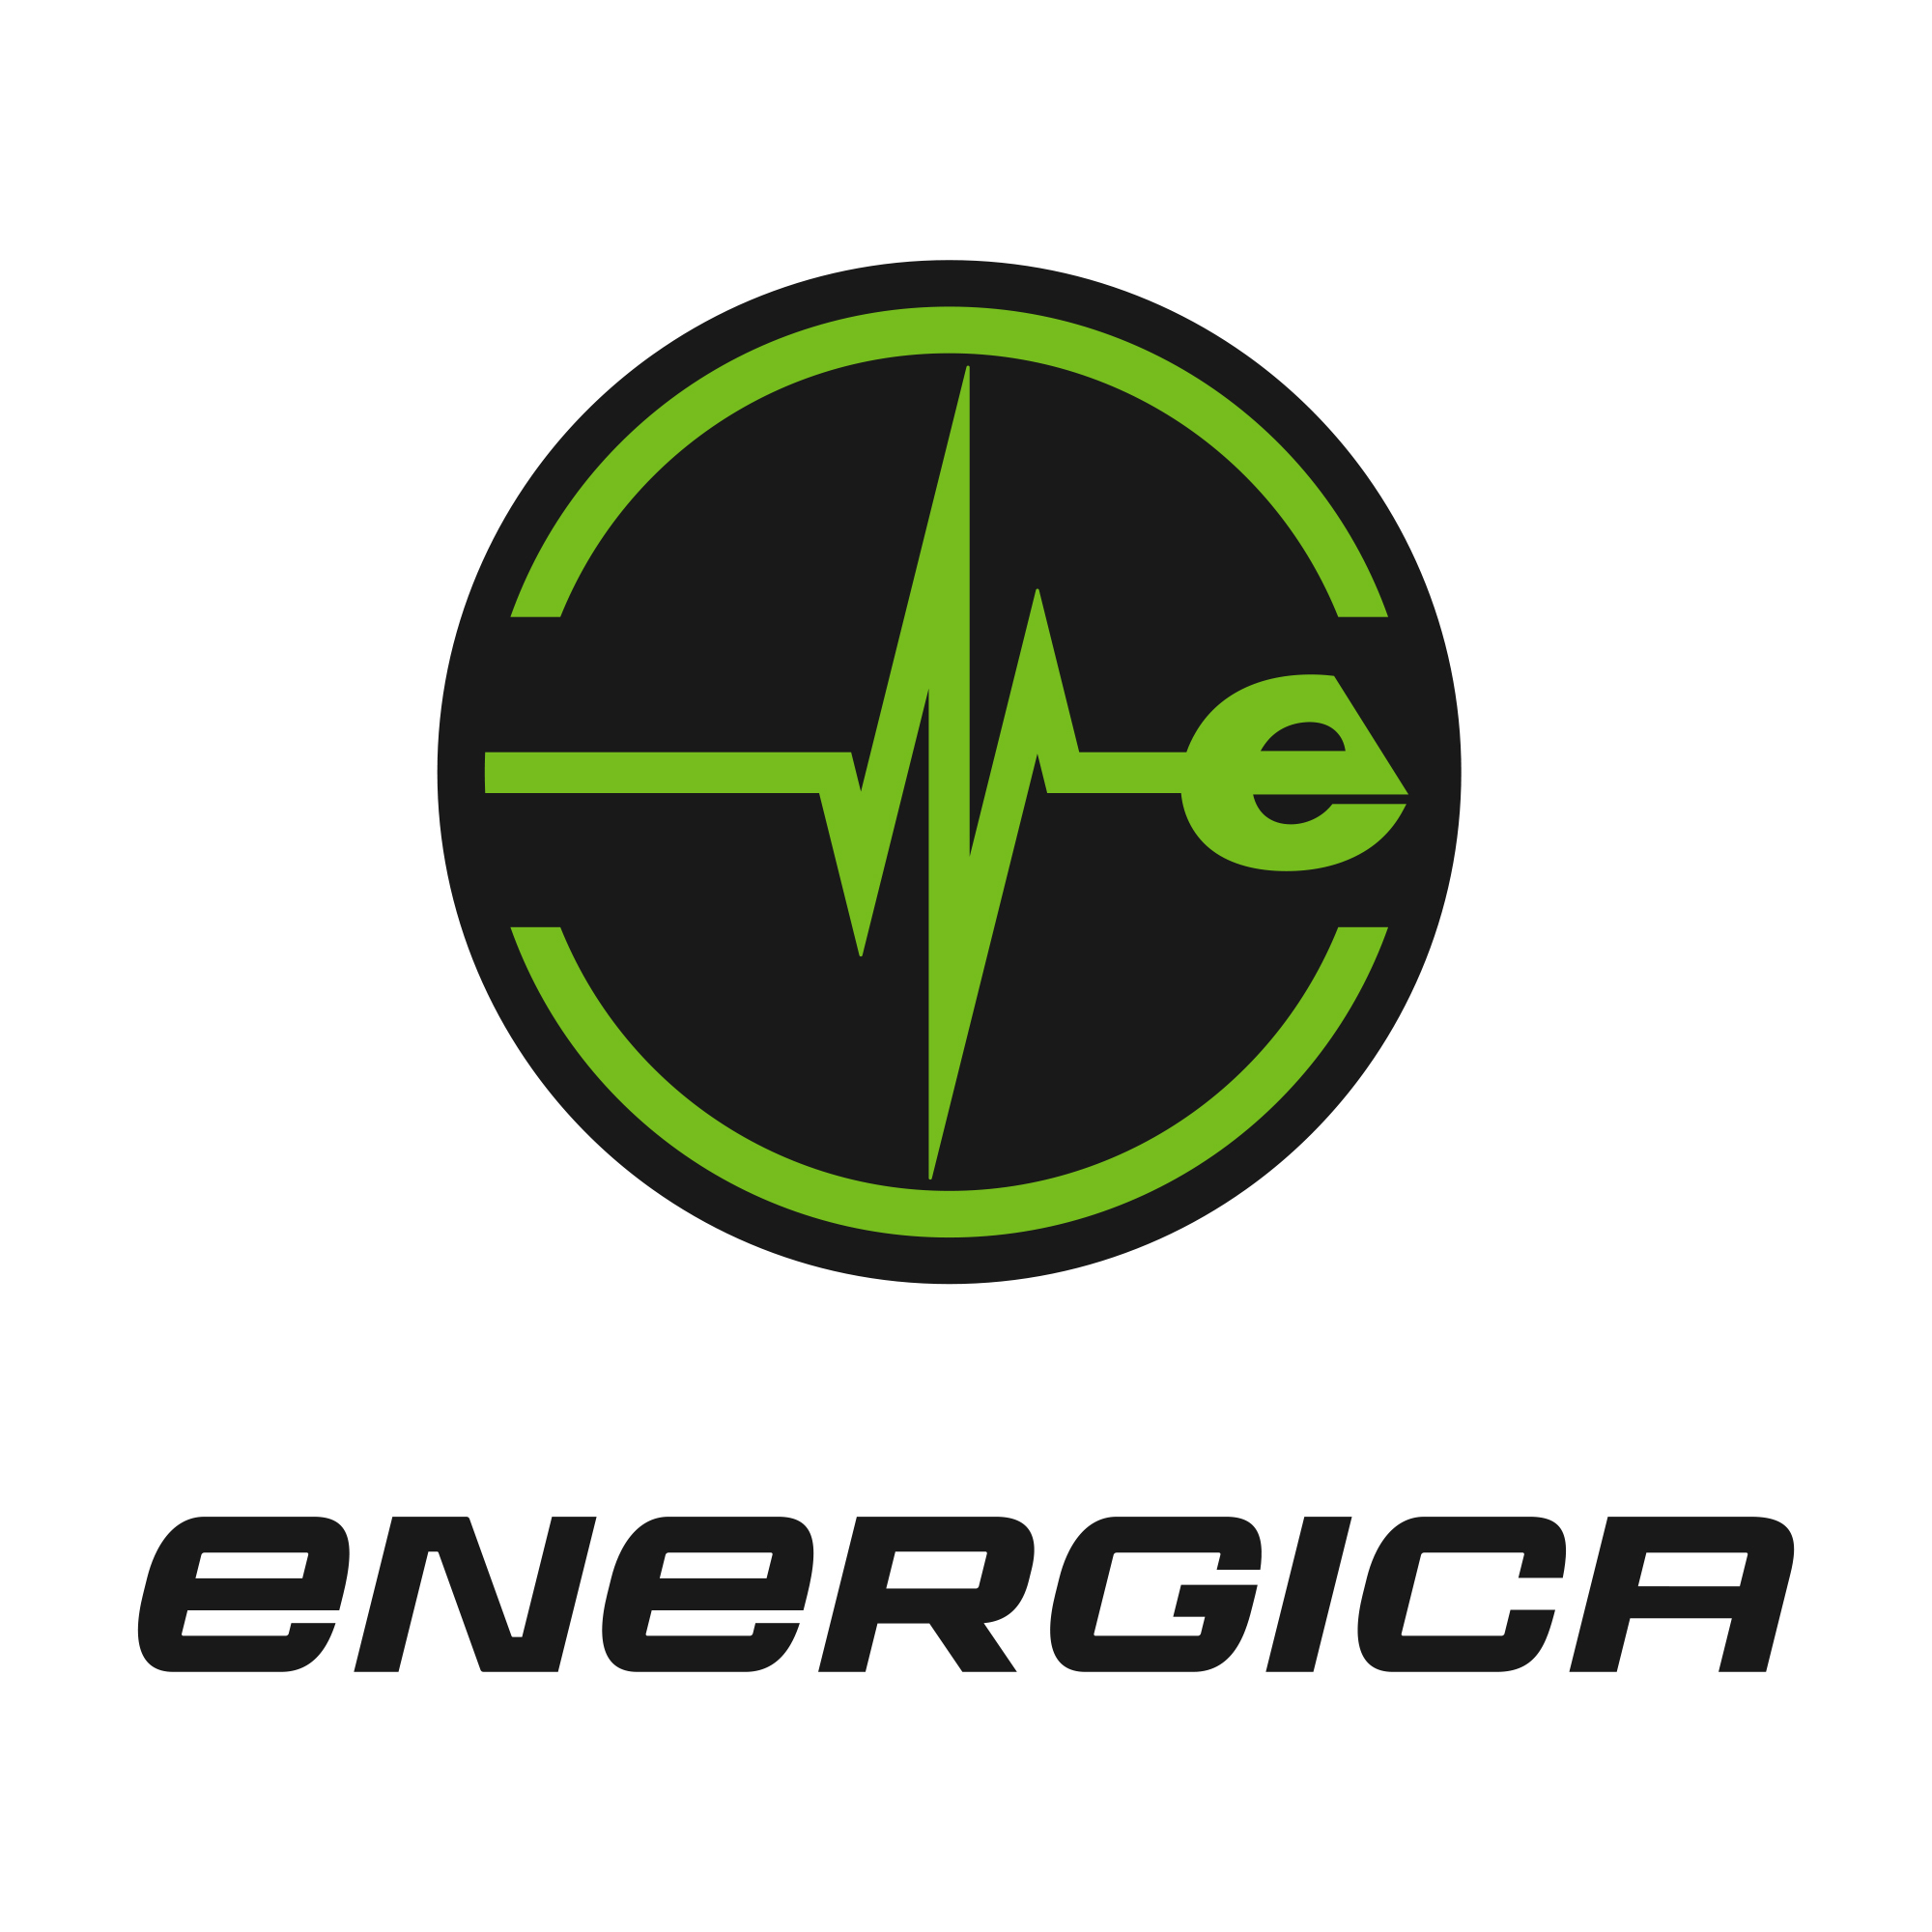 Energica Motor Company S.p.A.